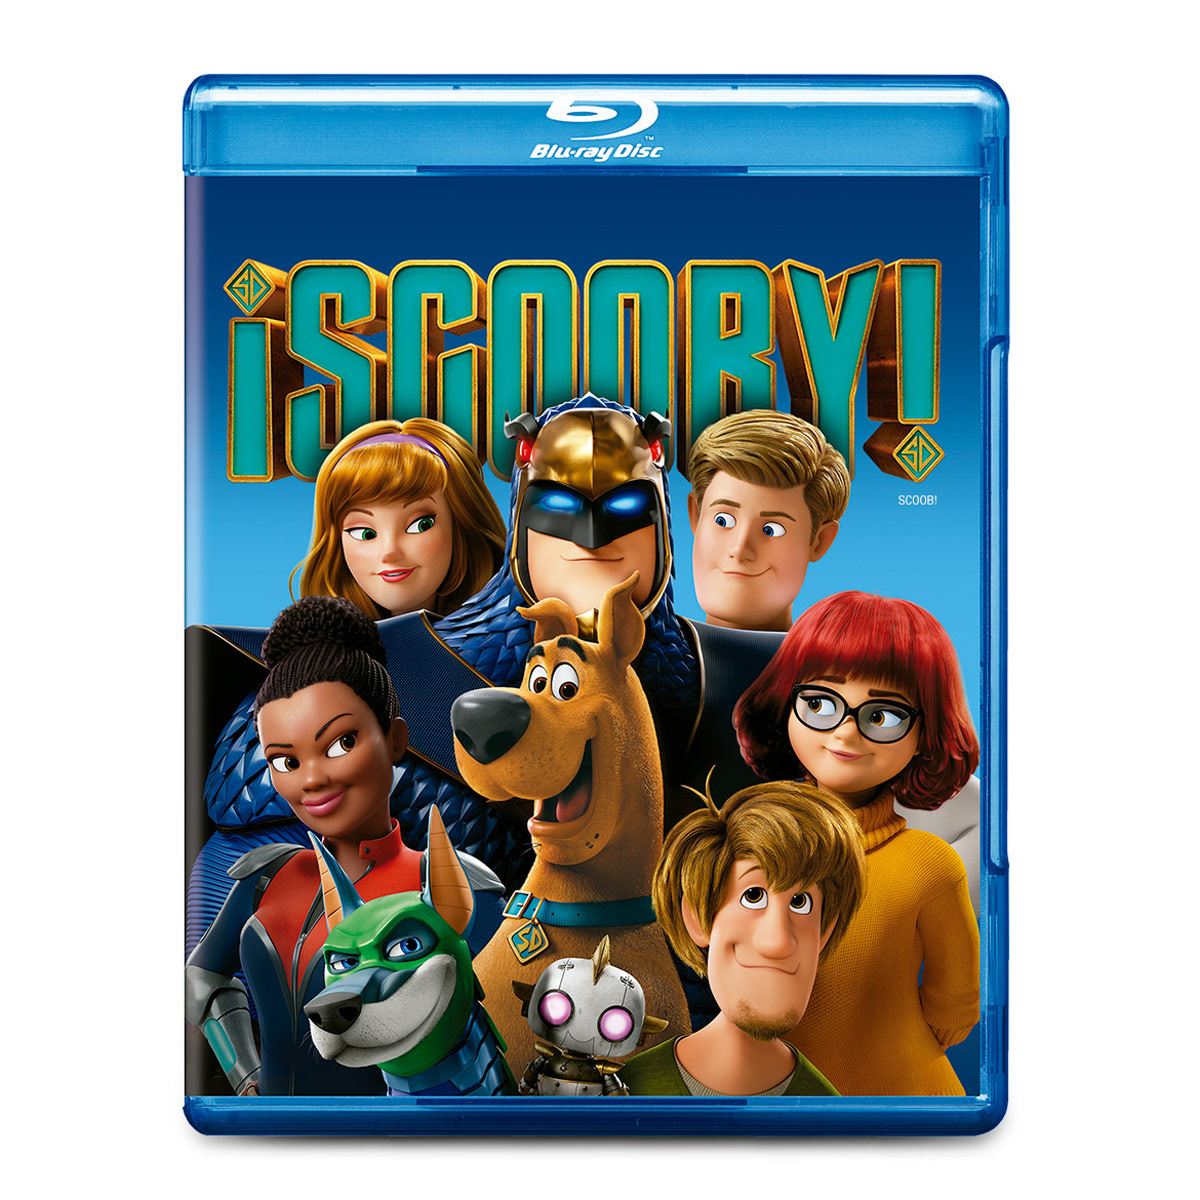 BluRay - ¡Scooby!